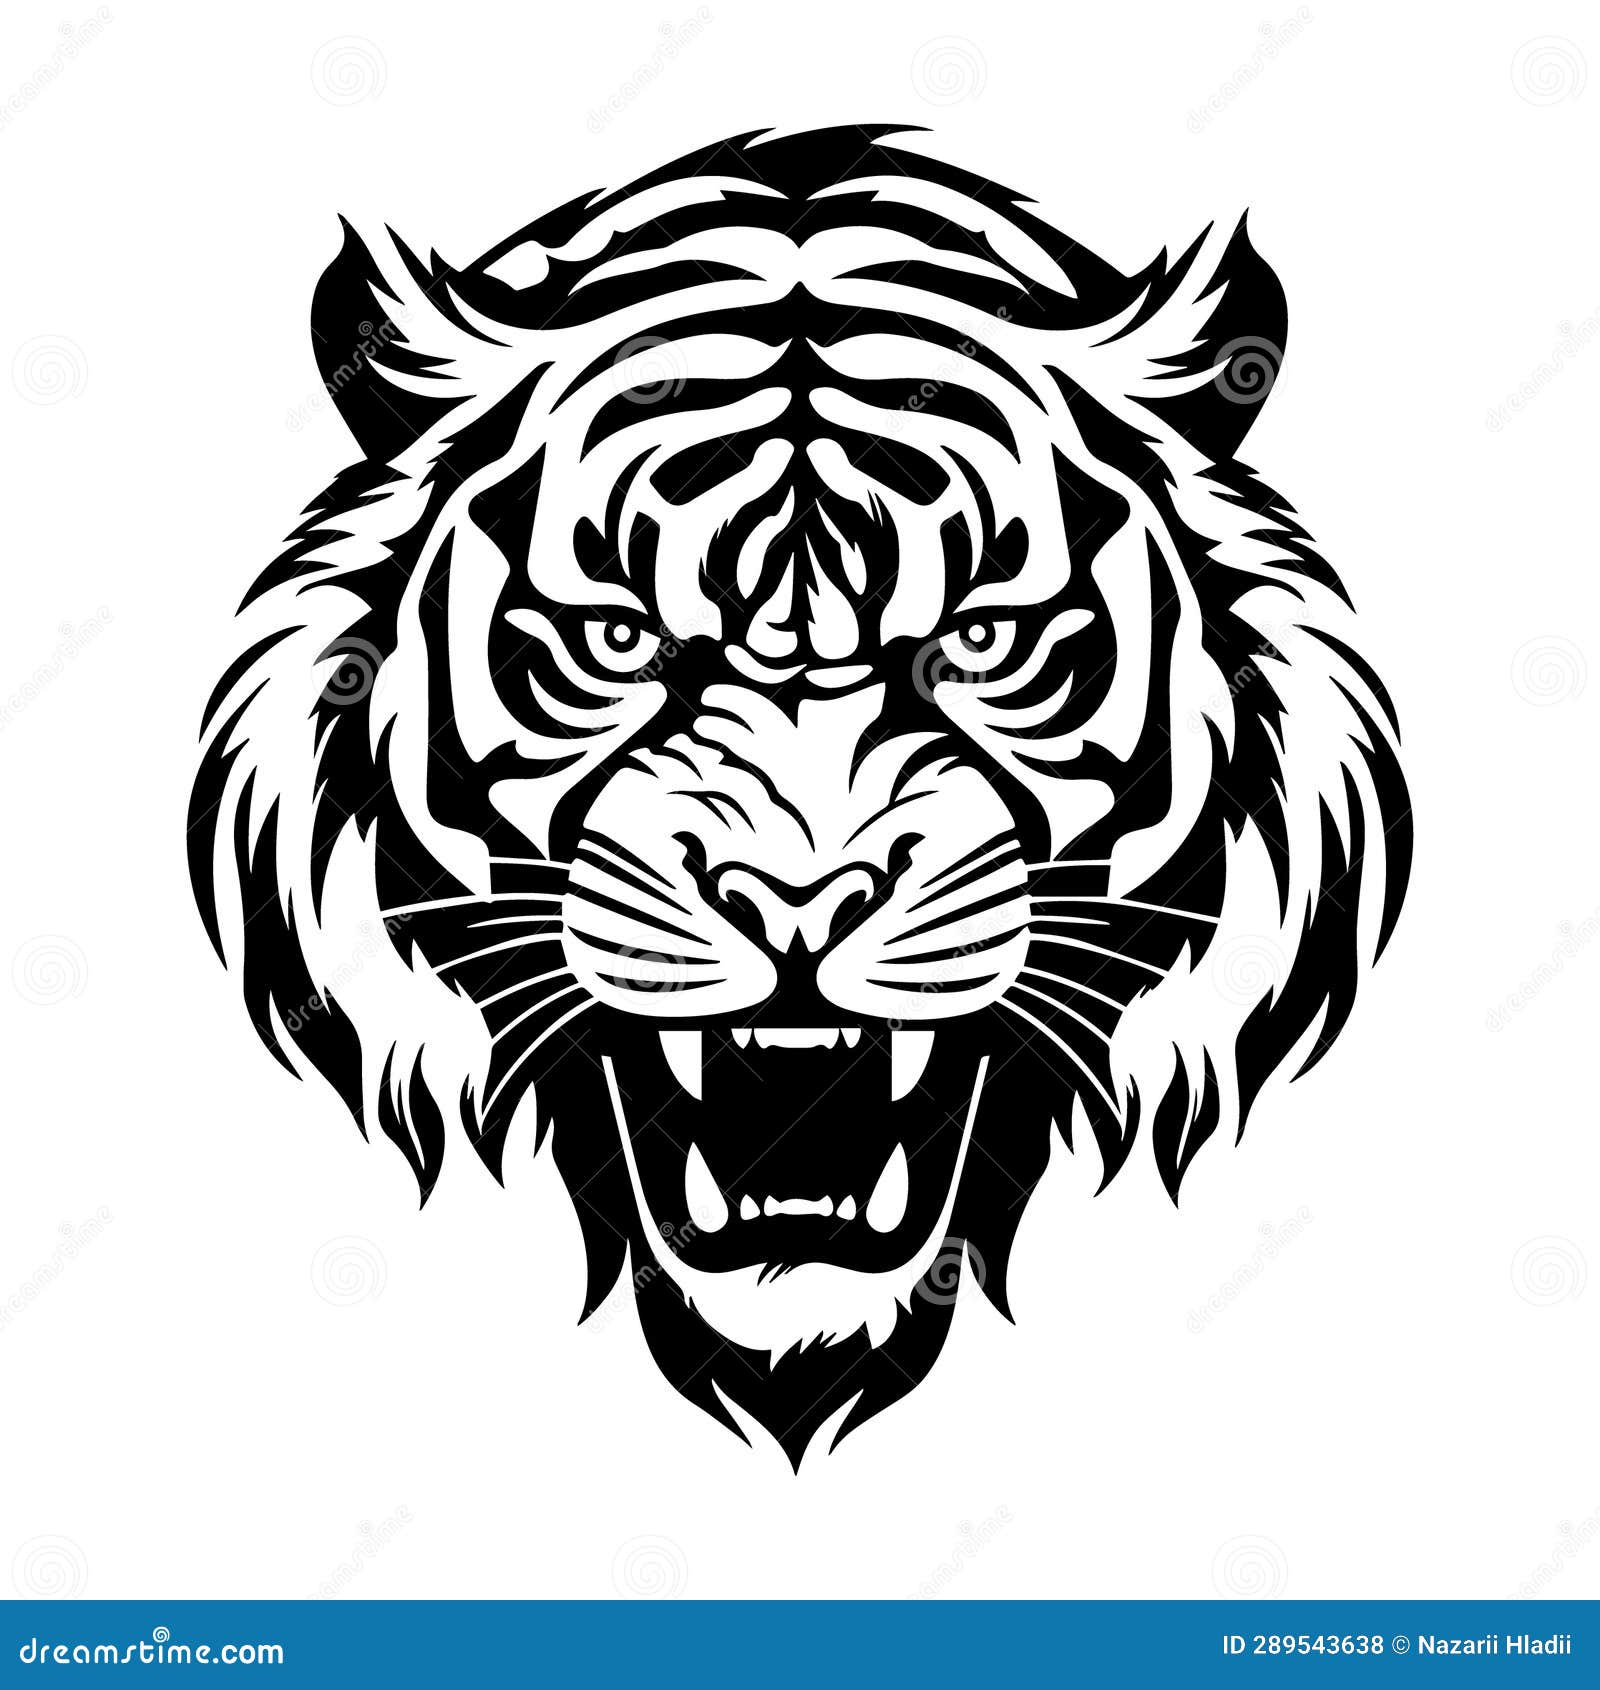 Black and White Illustration of Wild Tiger Face. Stock Illustration ...